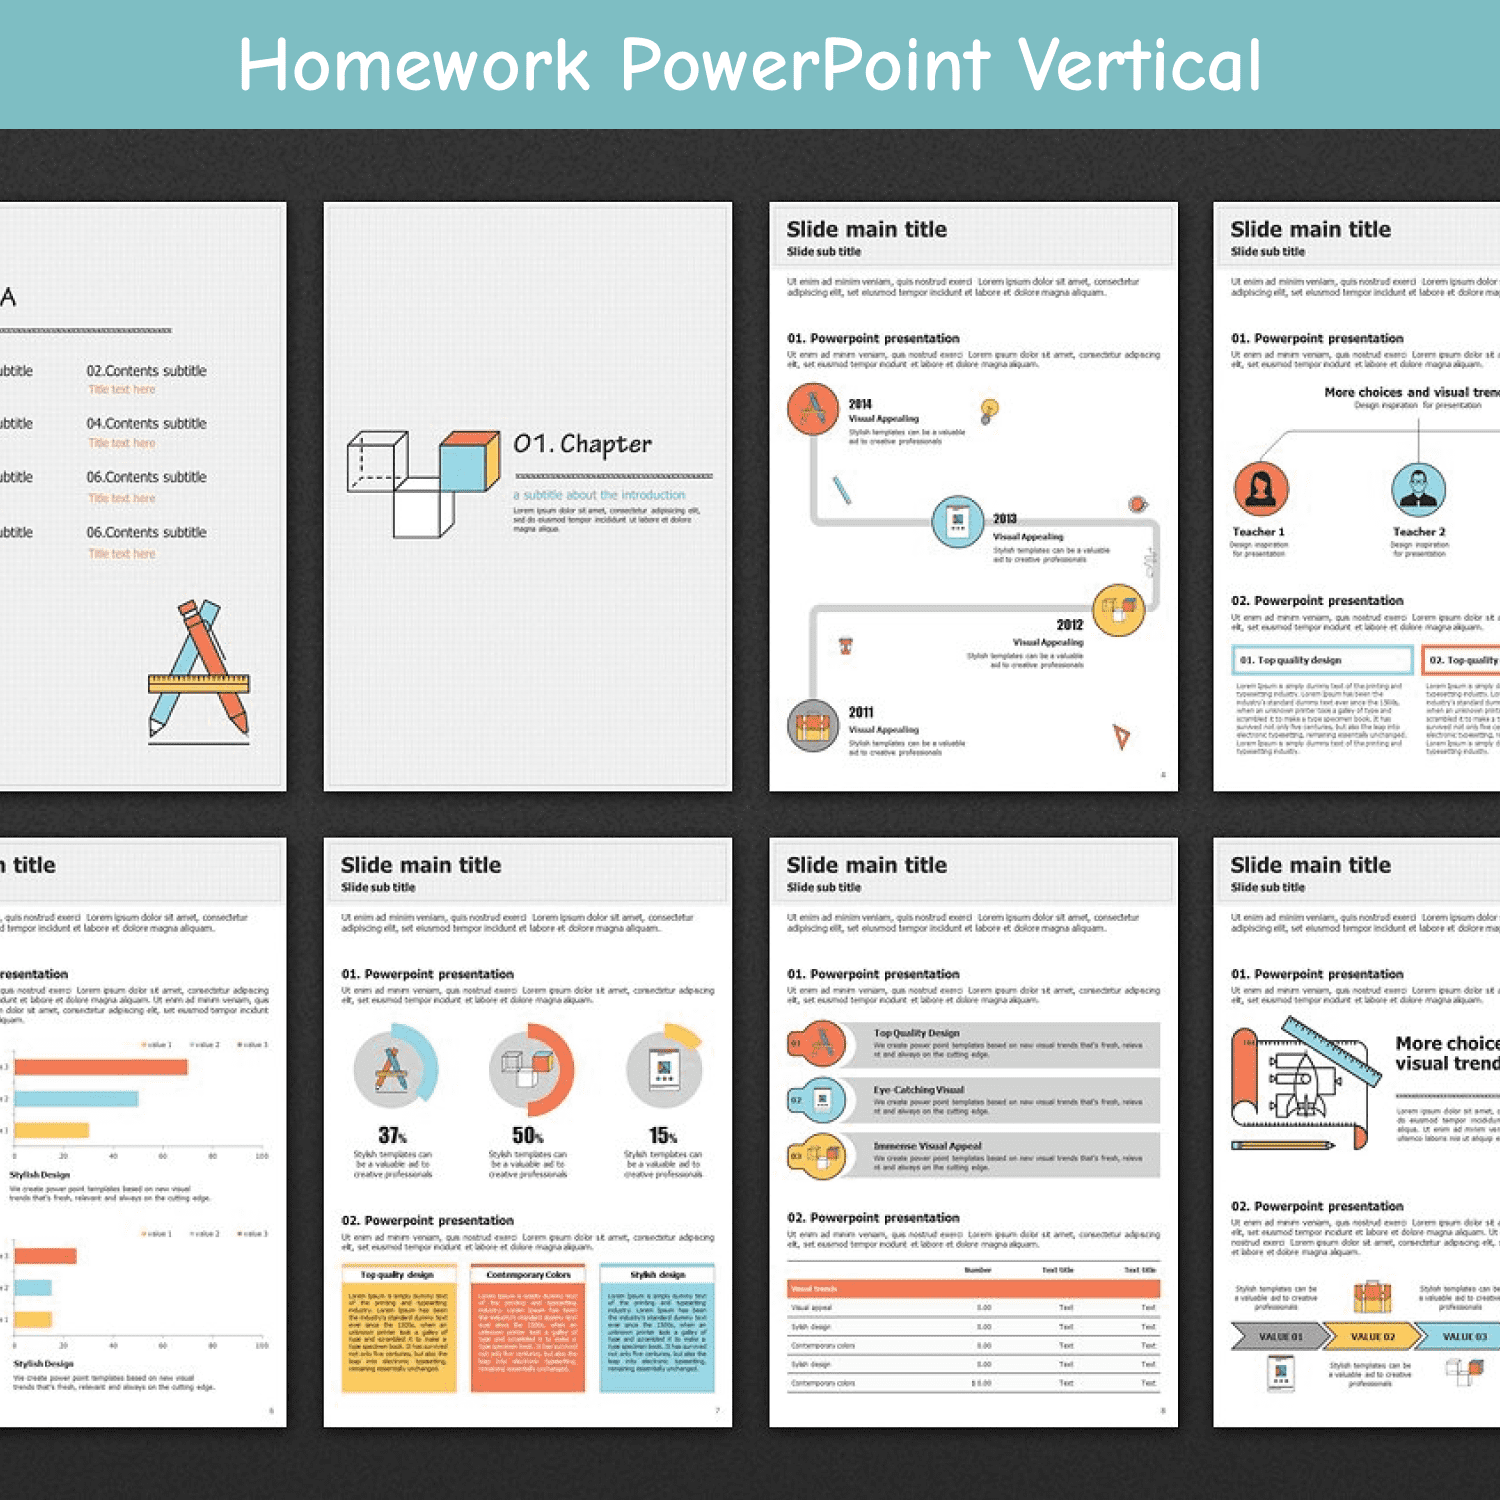 Homework PowerPoint Vertical.